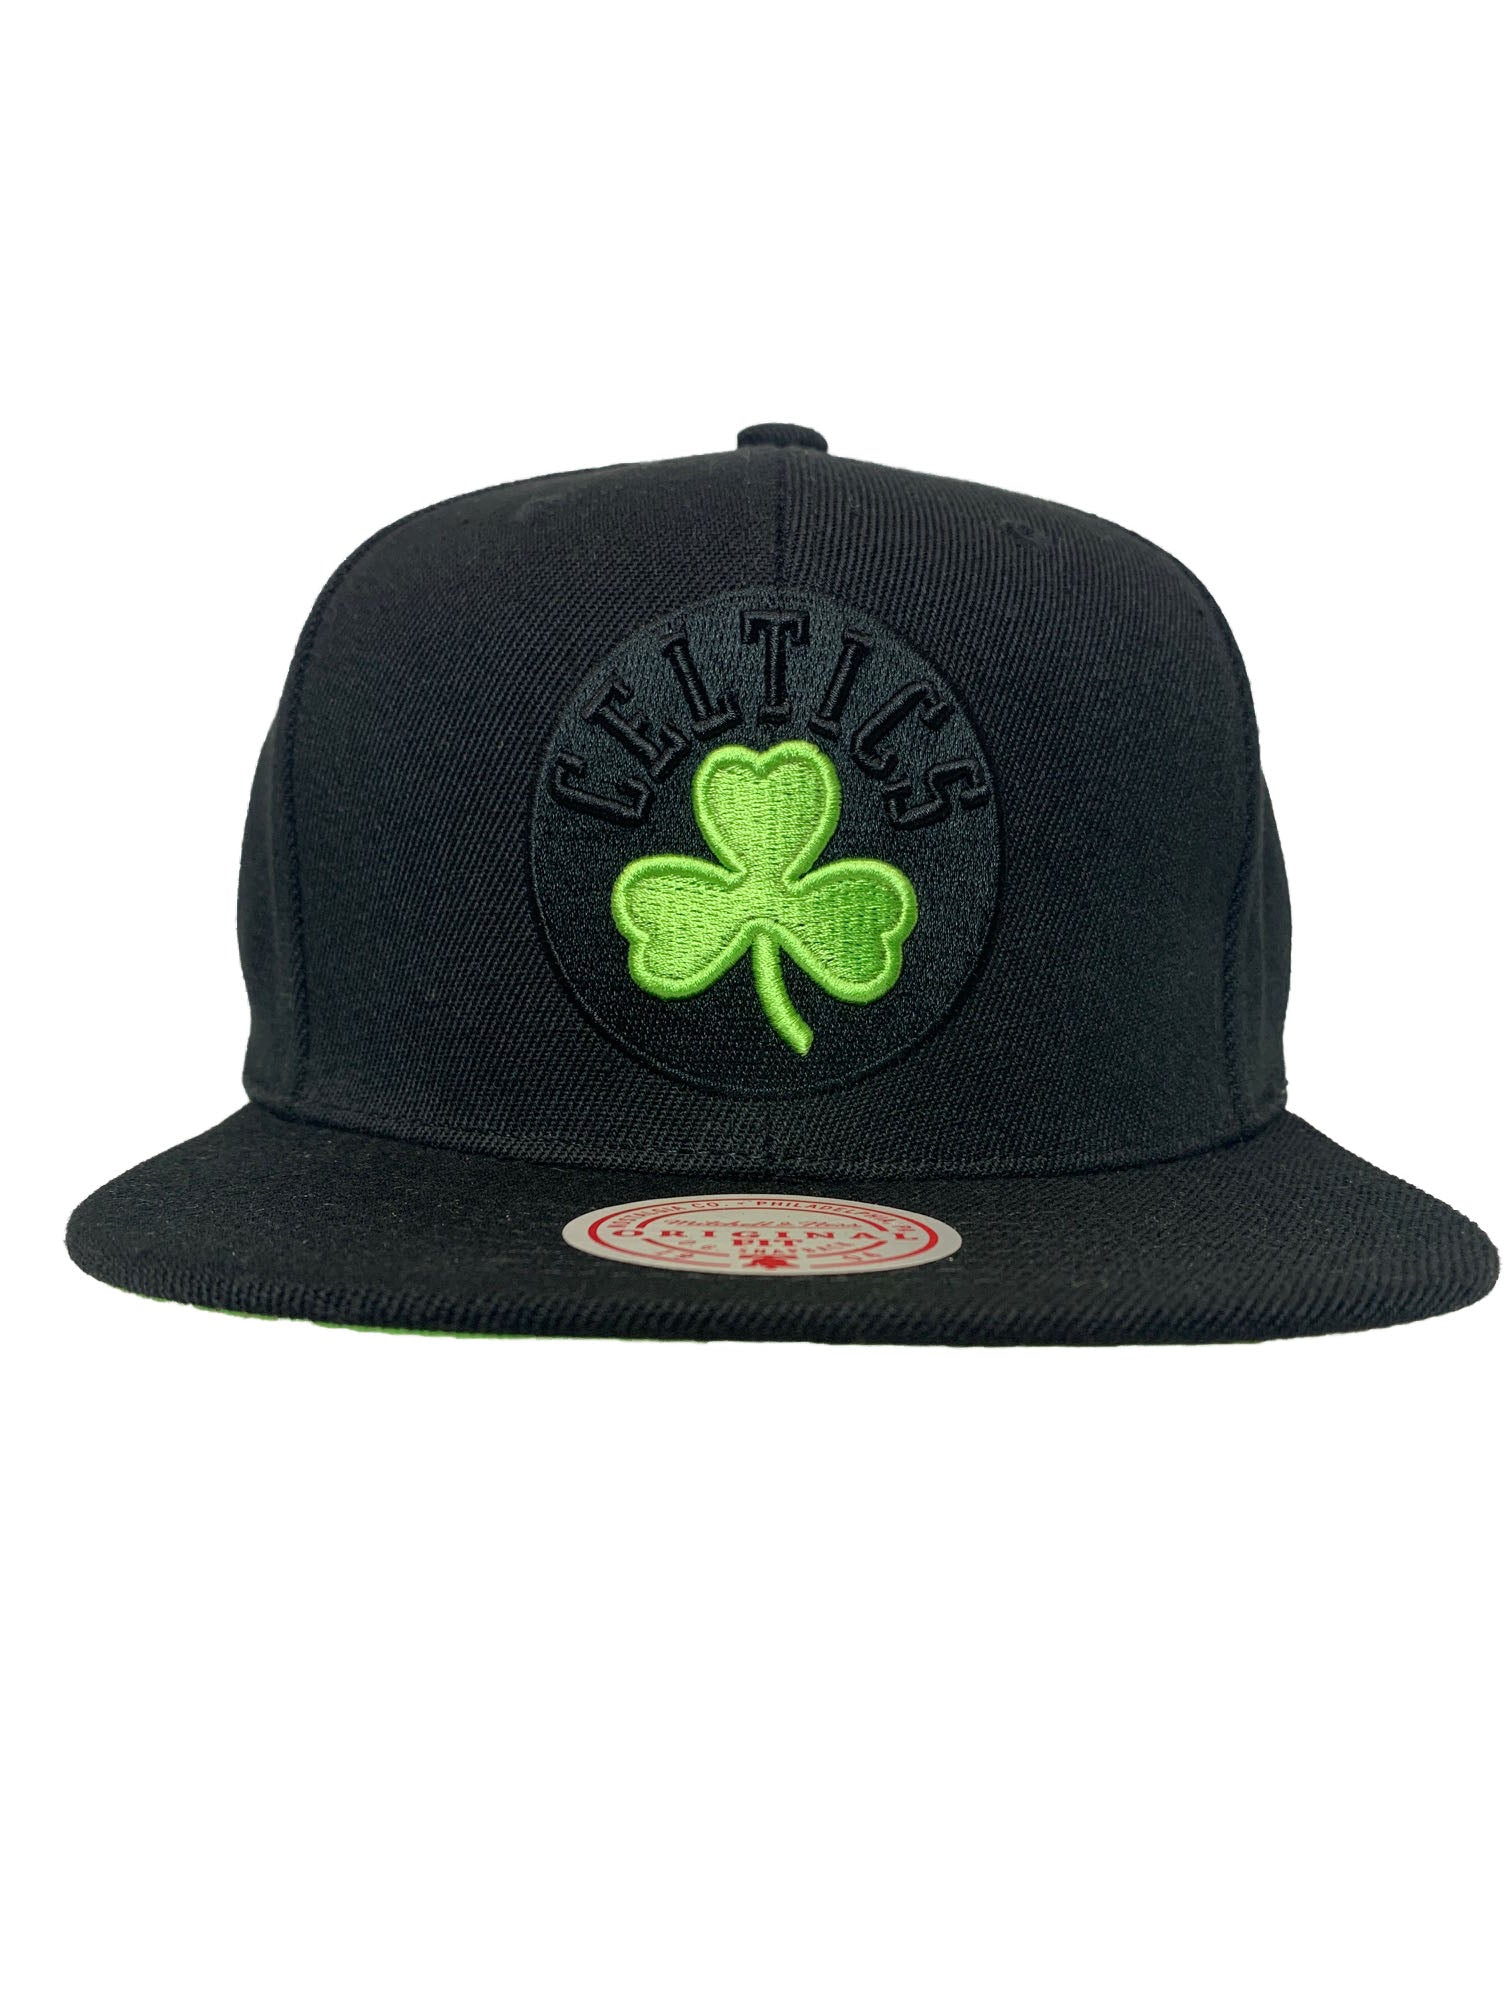 Boston Celtics Logo Mitchell & Ness NBA Green Snapback Hat